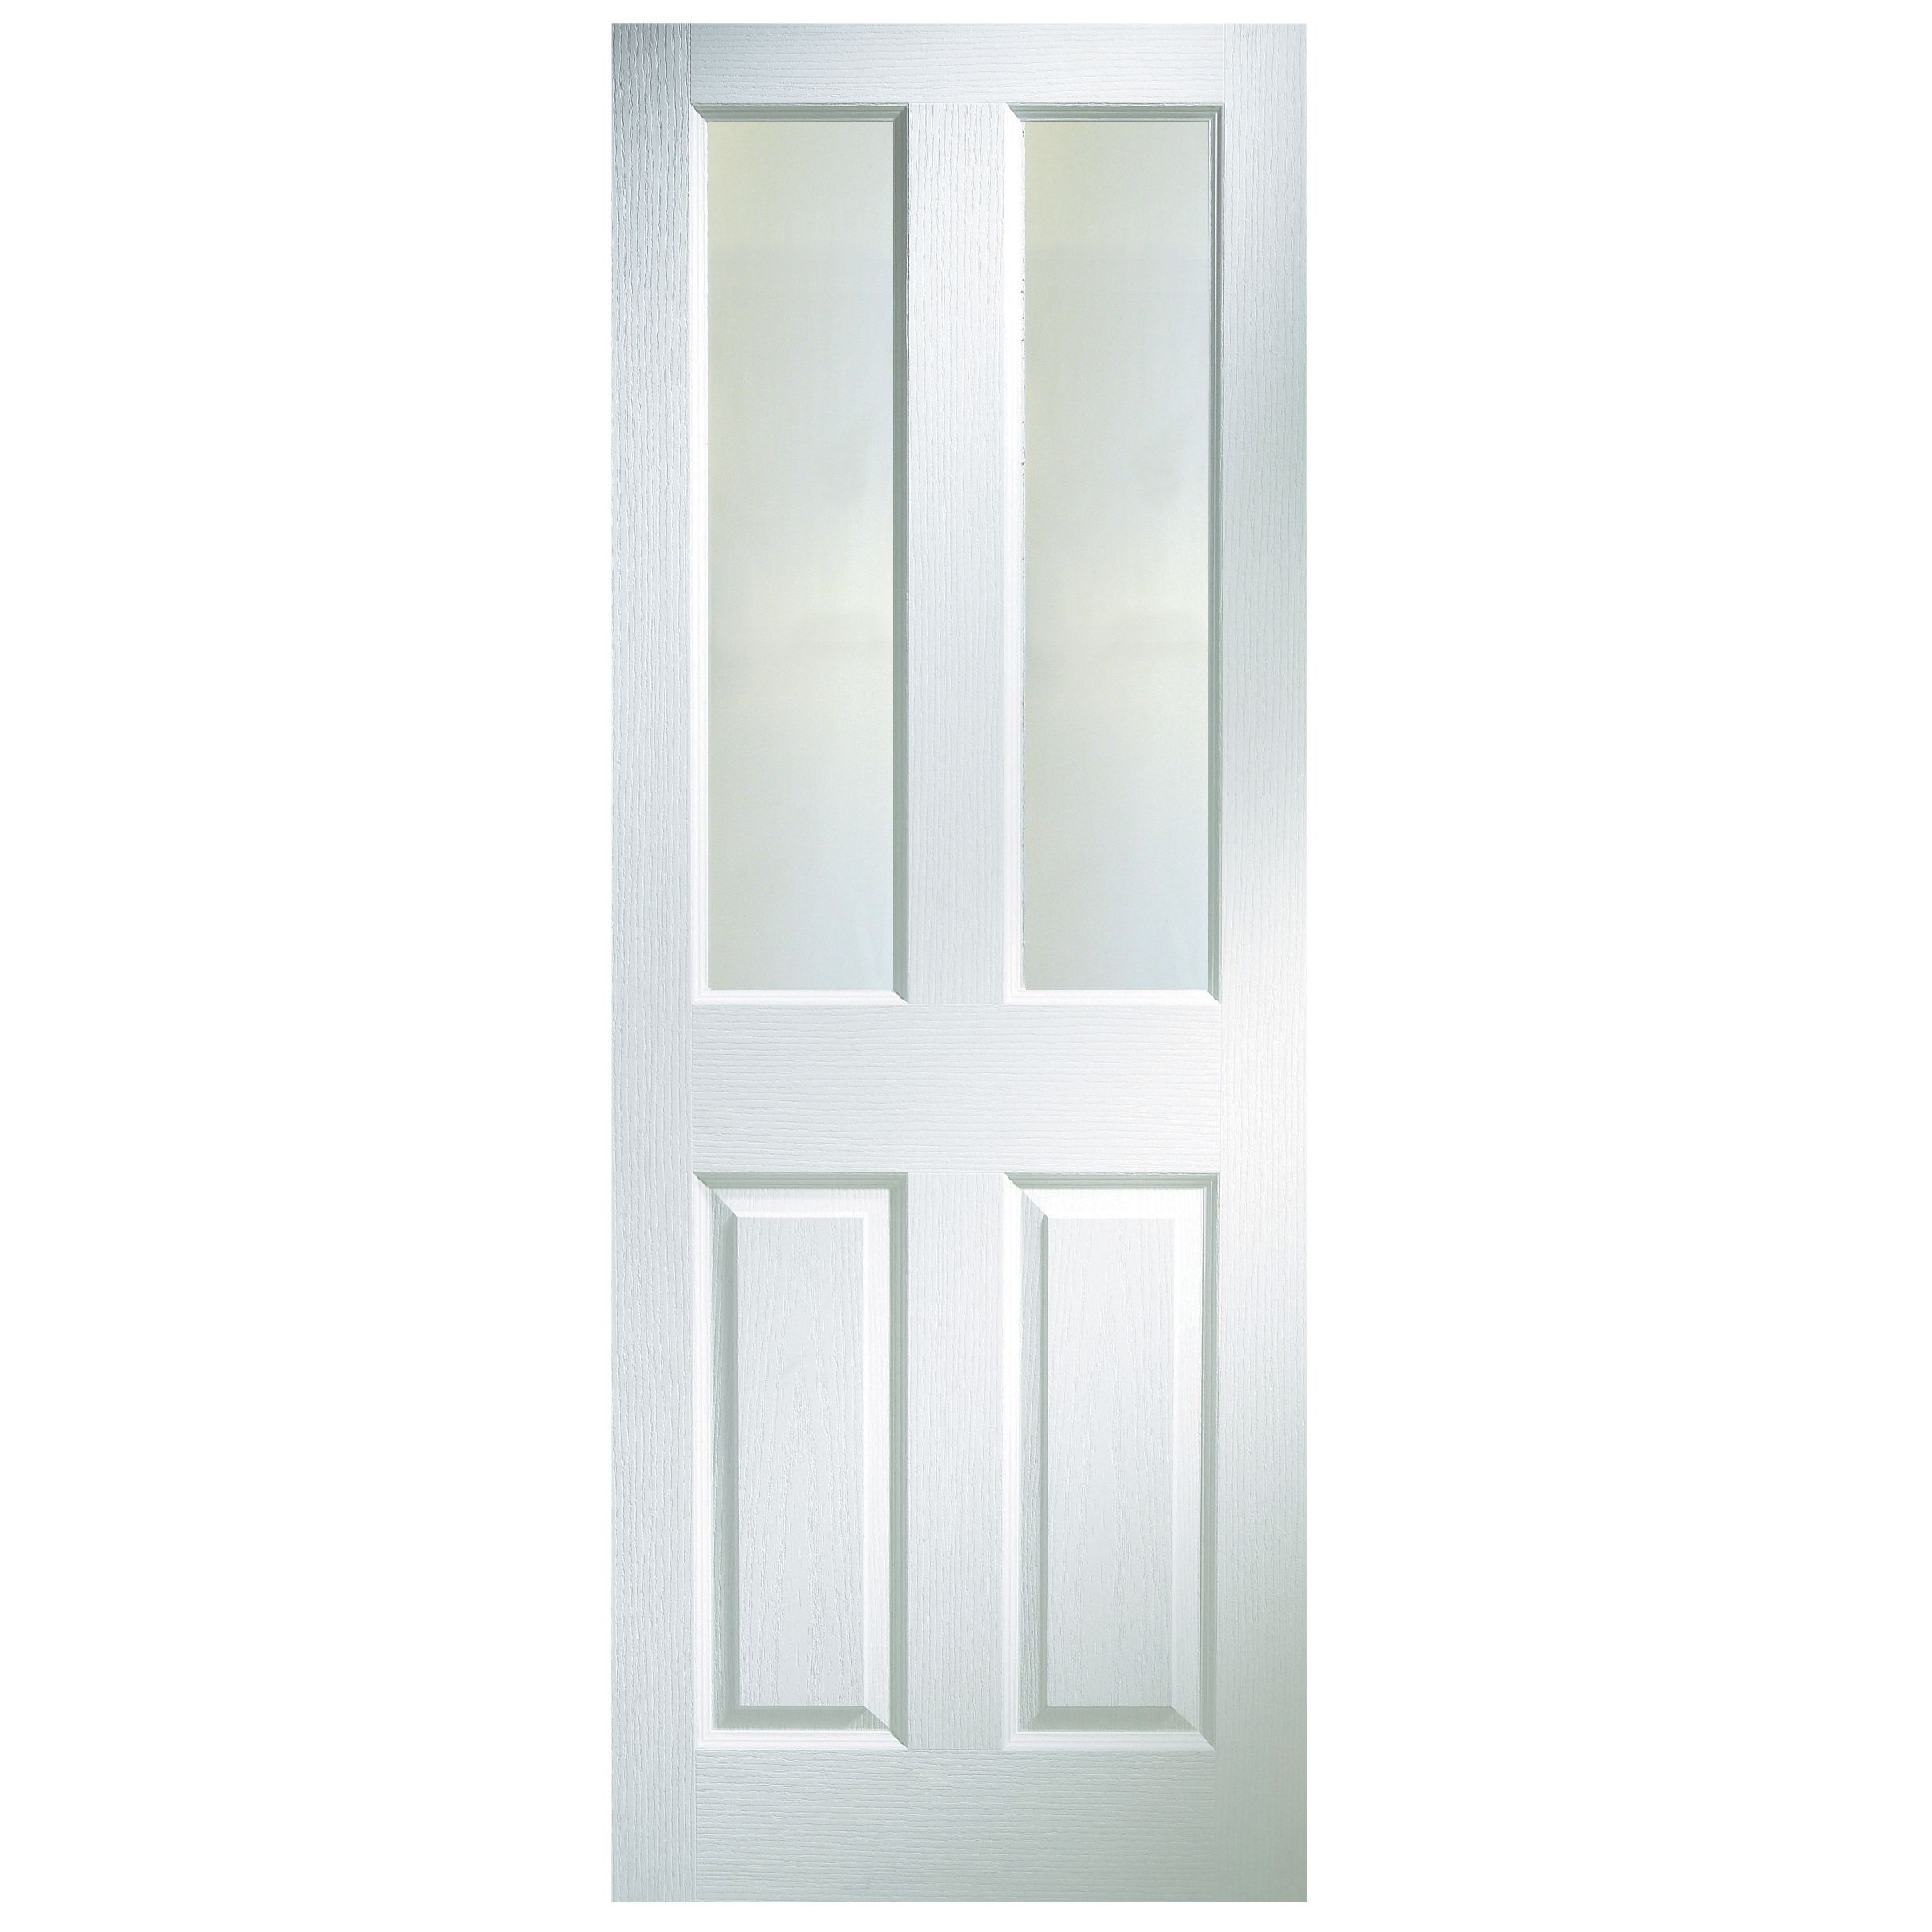 4 panel Frosted Glazed White Woodgrain effect Internal Door, (H)1981mm (W)838mm (T)35mm